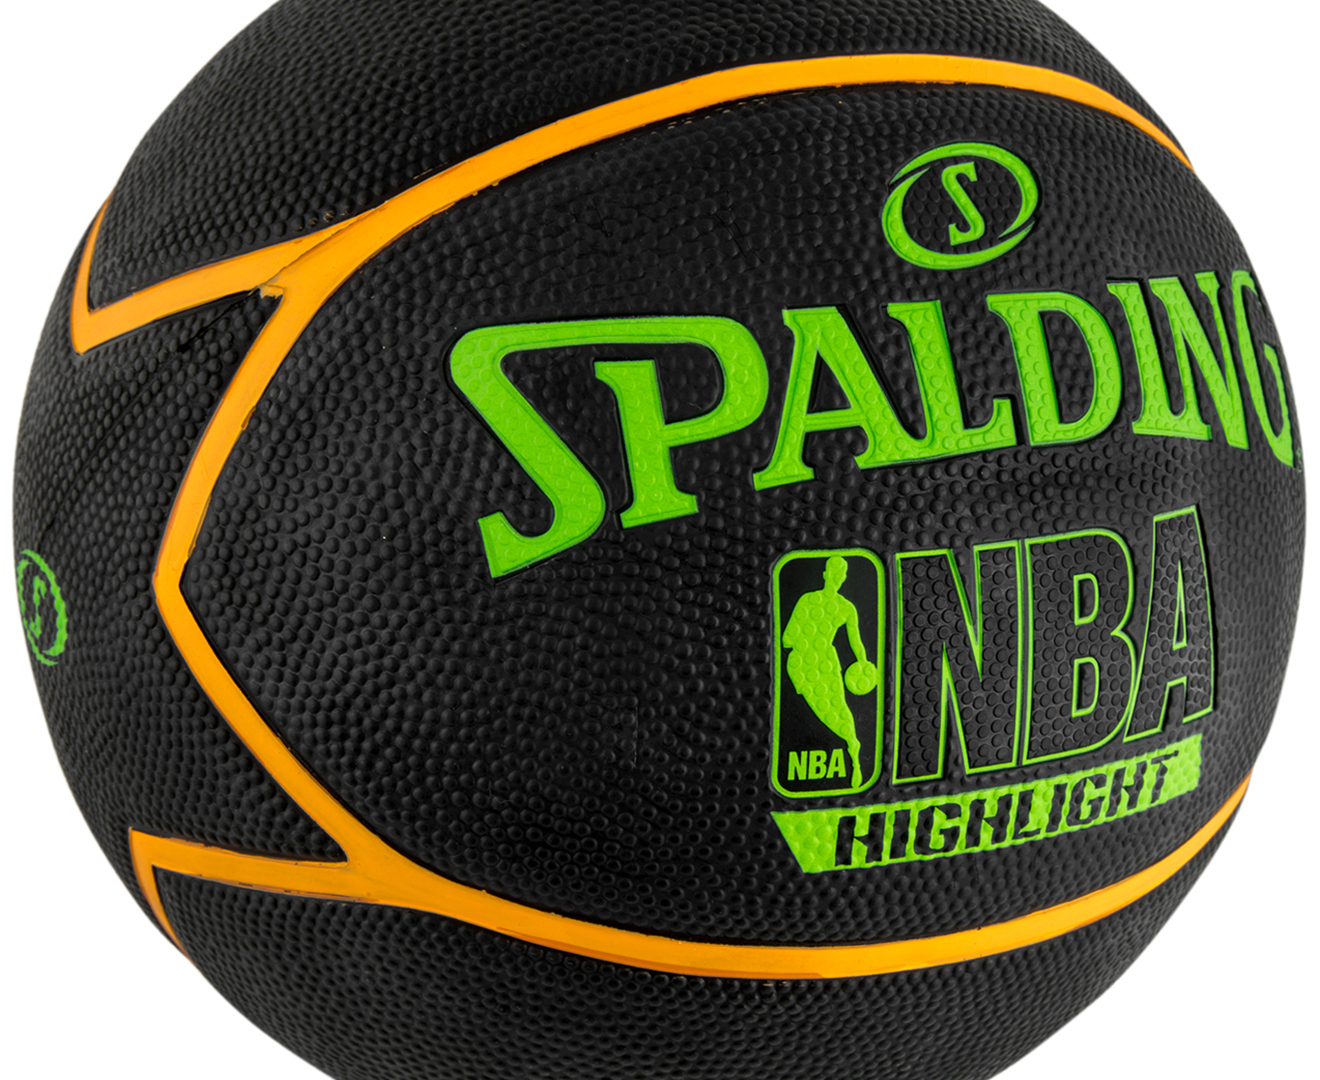 Spalding Size 7 NBA Highlight Outdoor Basketball - Green/Orange | Catch ...